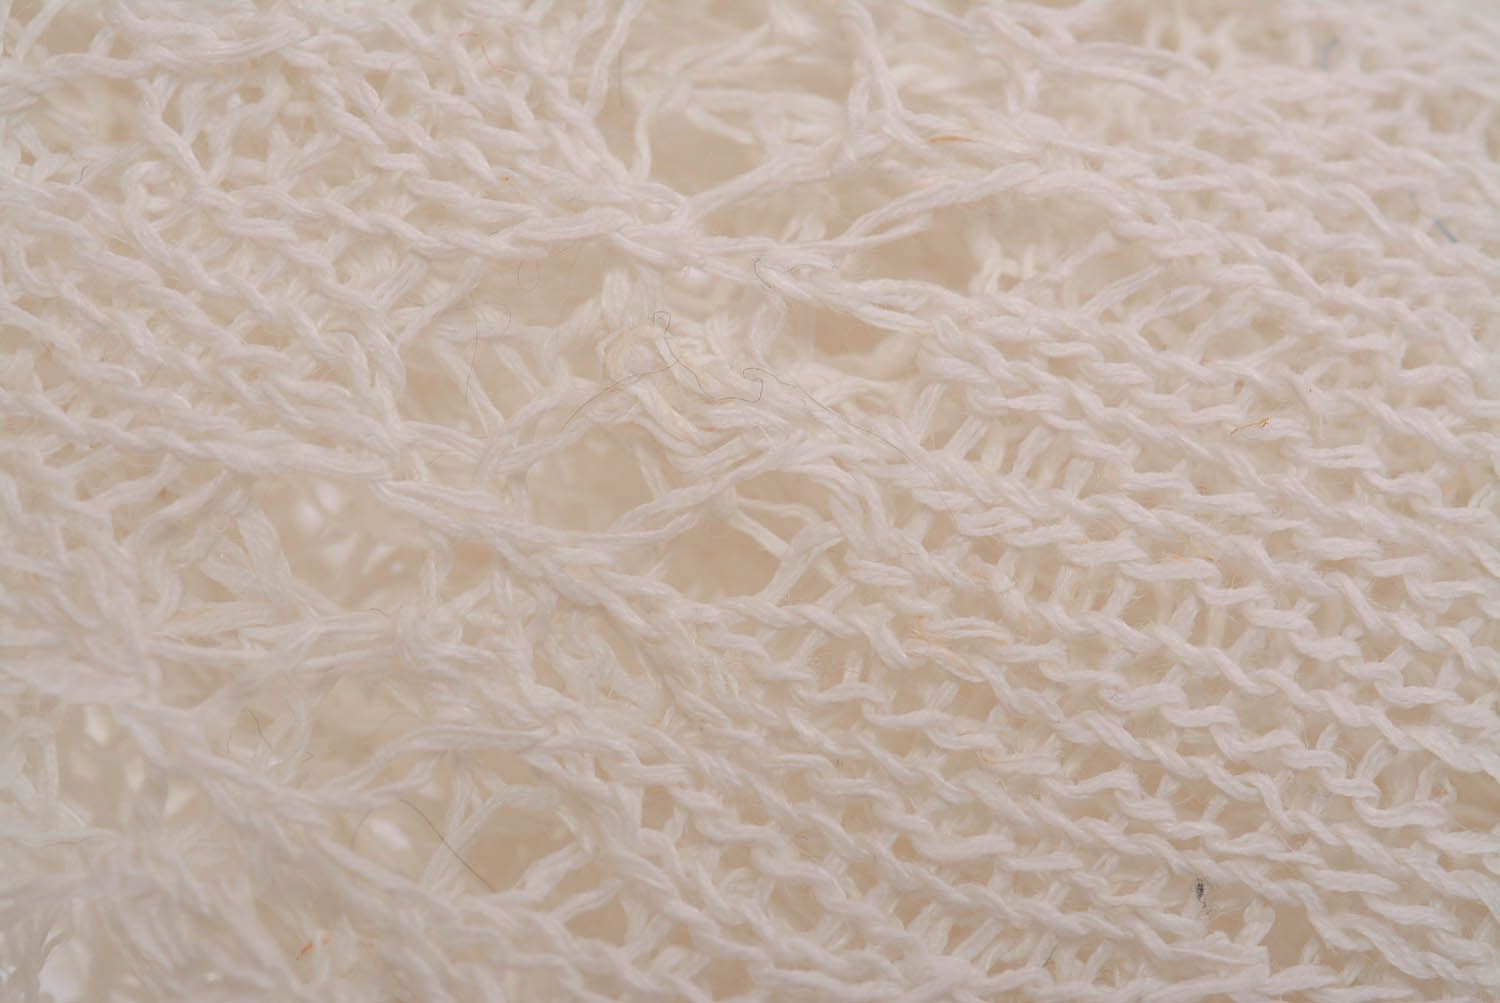 Lace crocheted napkin photo 3